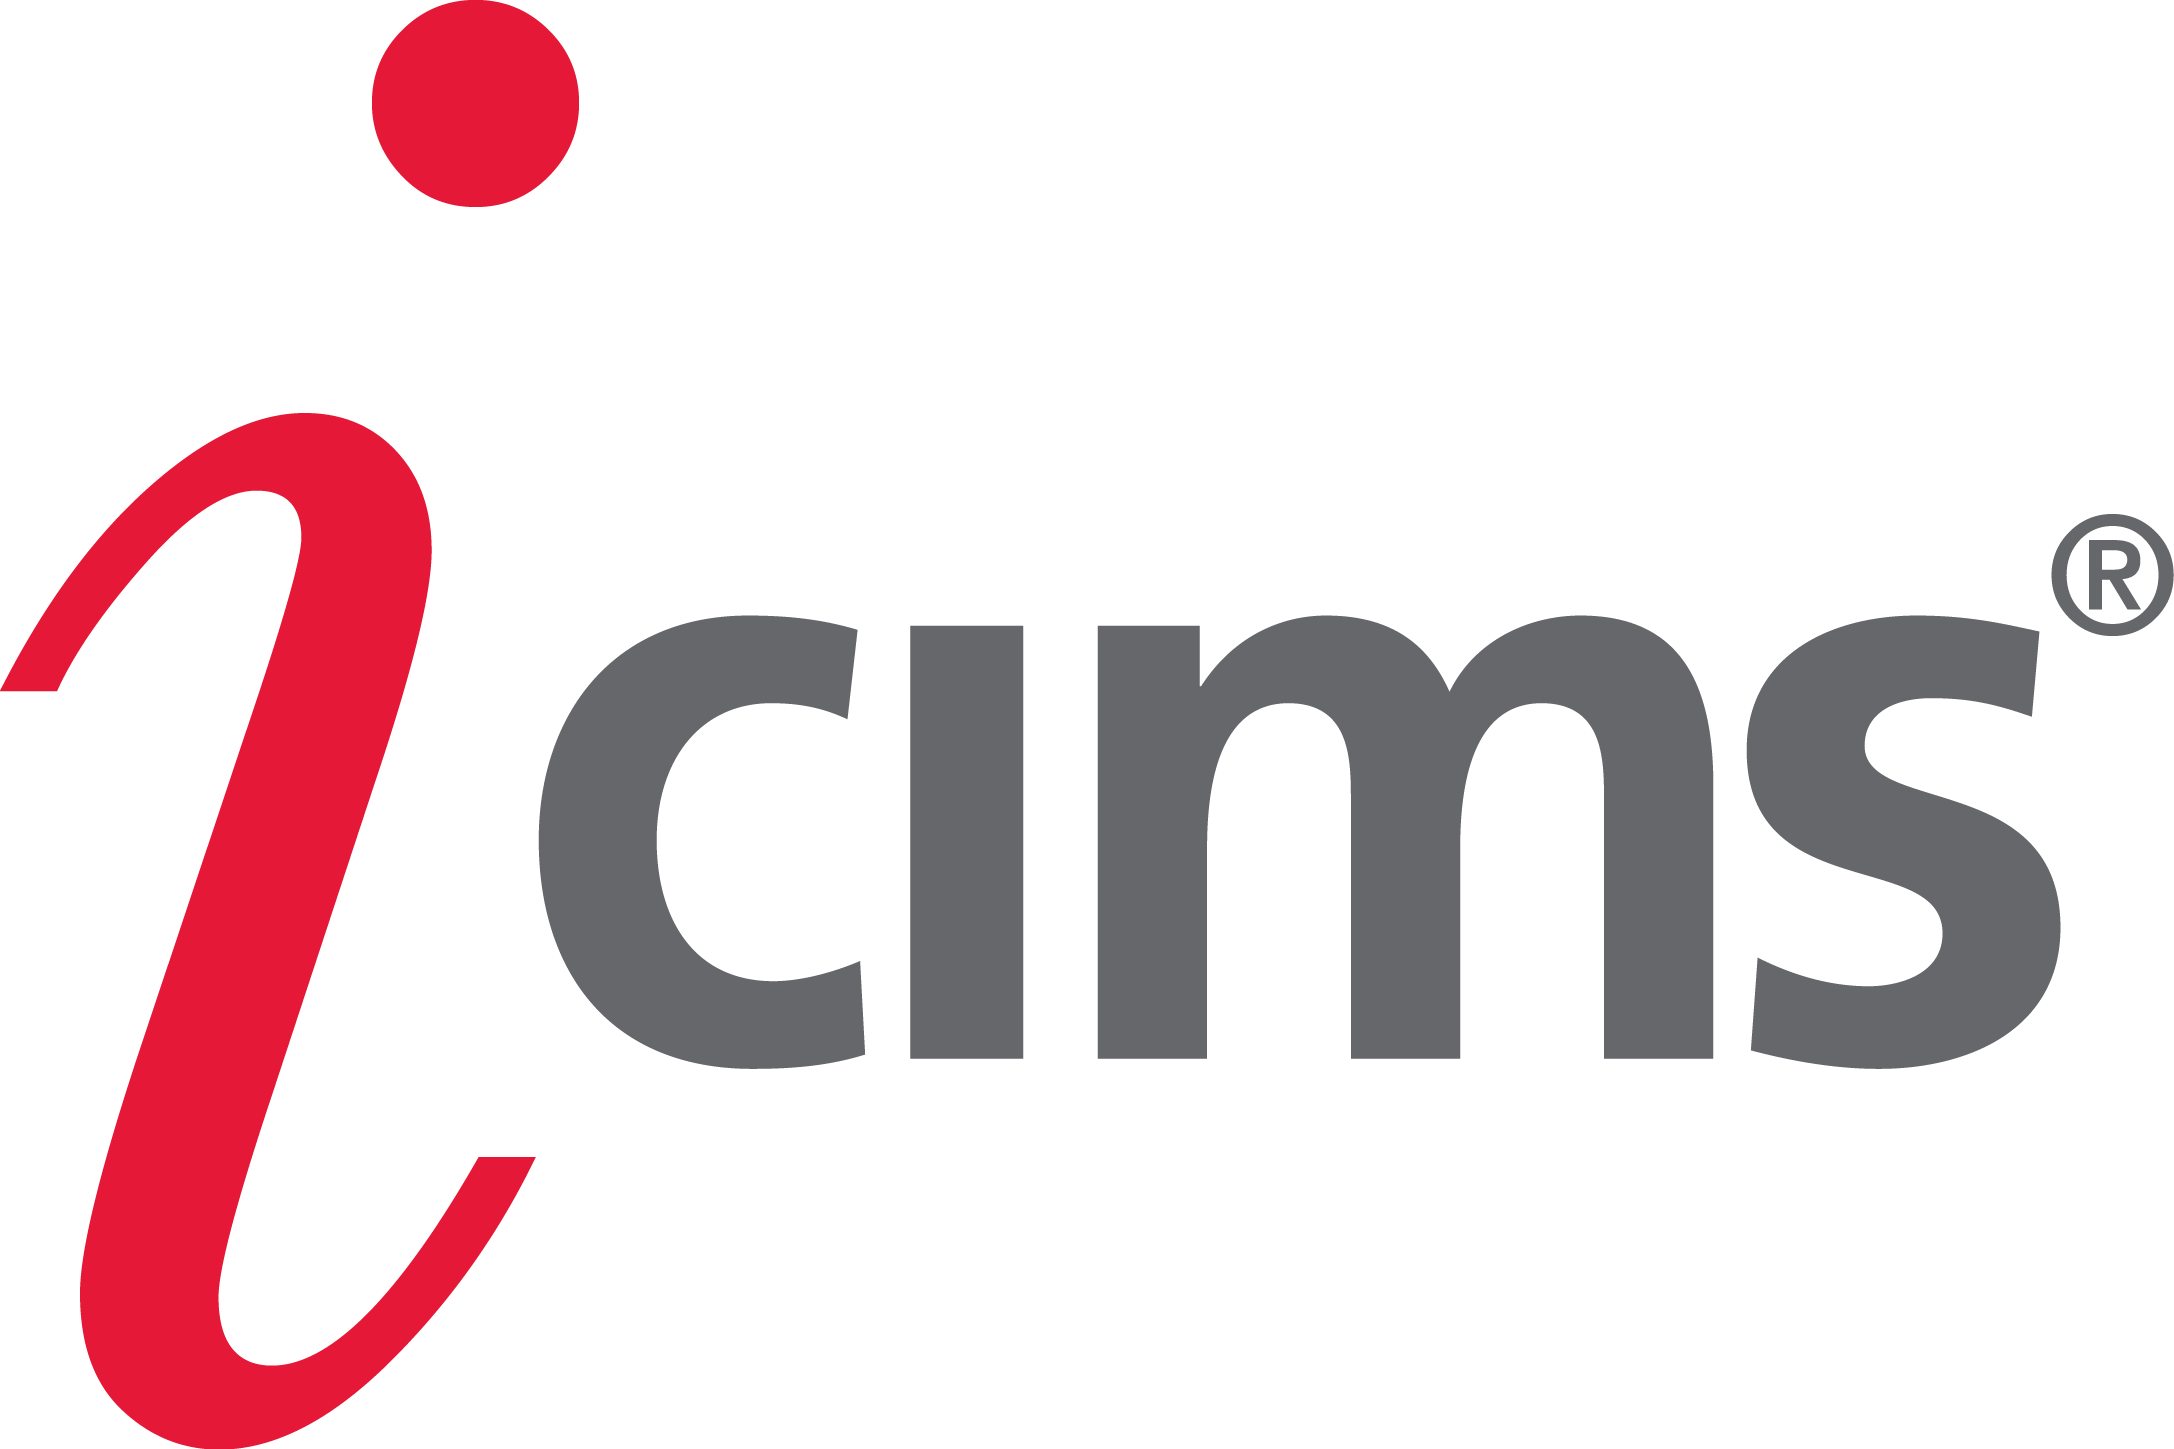 iCIMS Announces Coll